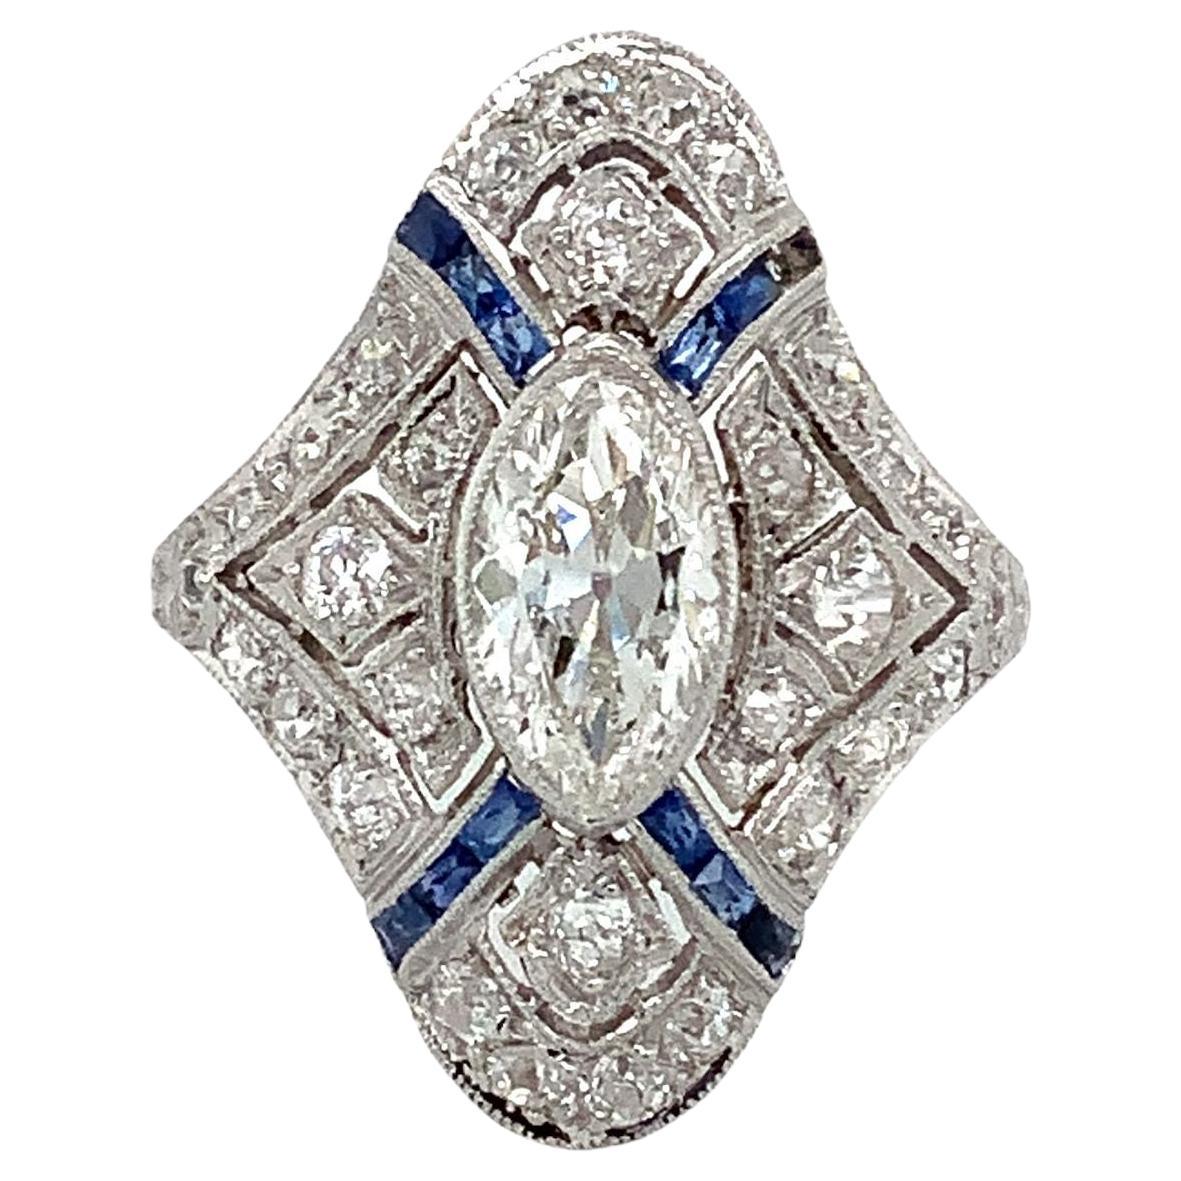 Antique Edwardian, Art Deco Filigree Marquise Diamond and Caliber Sapphire Ring